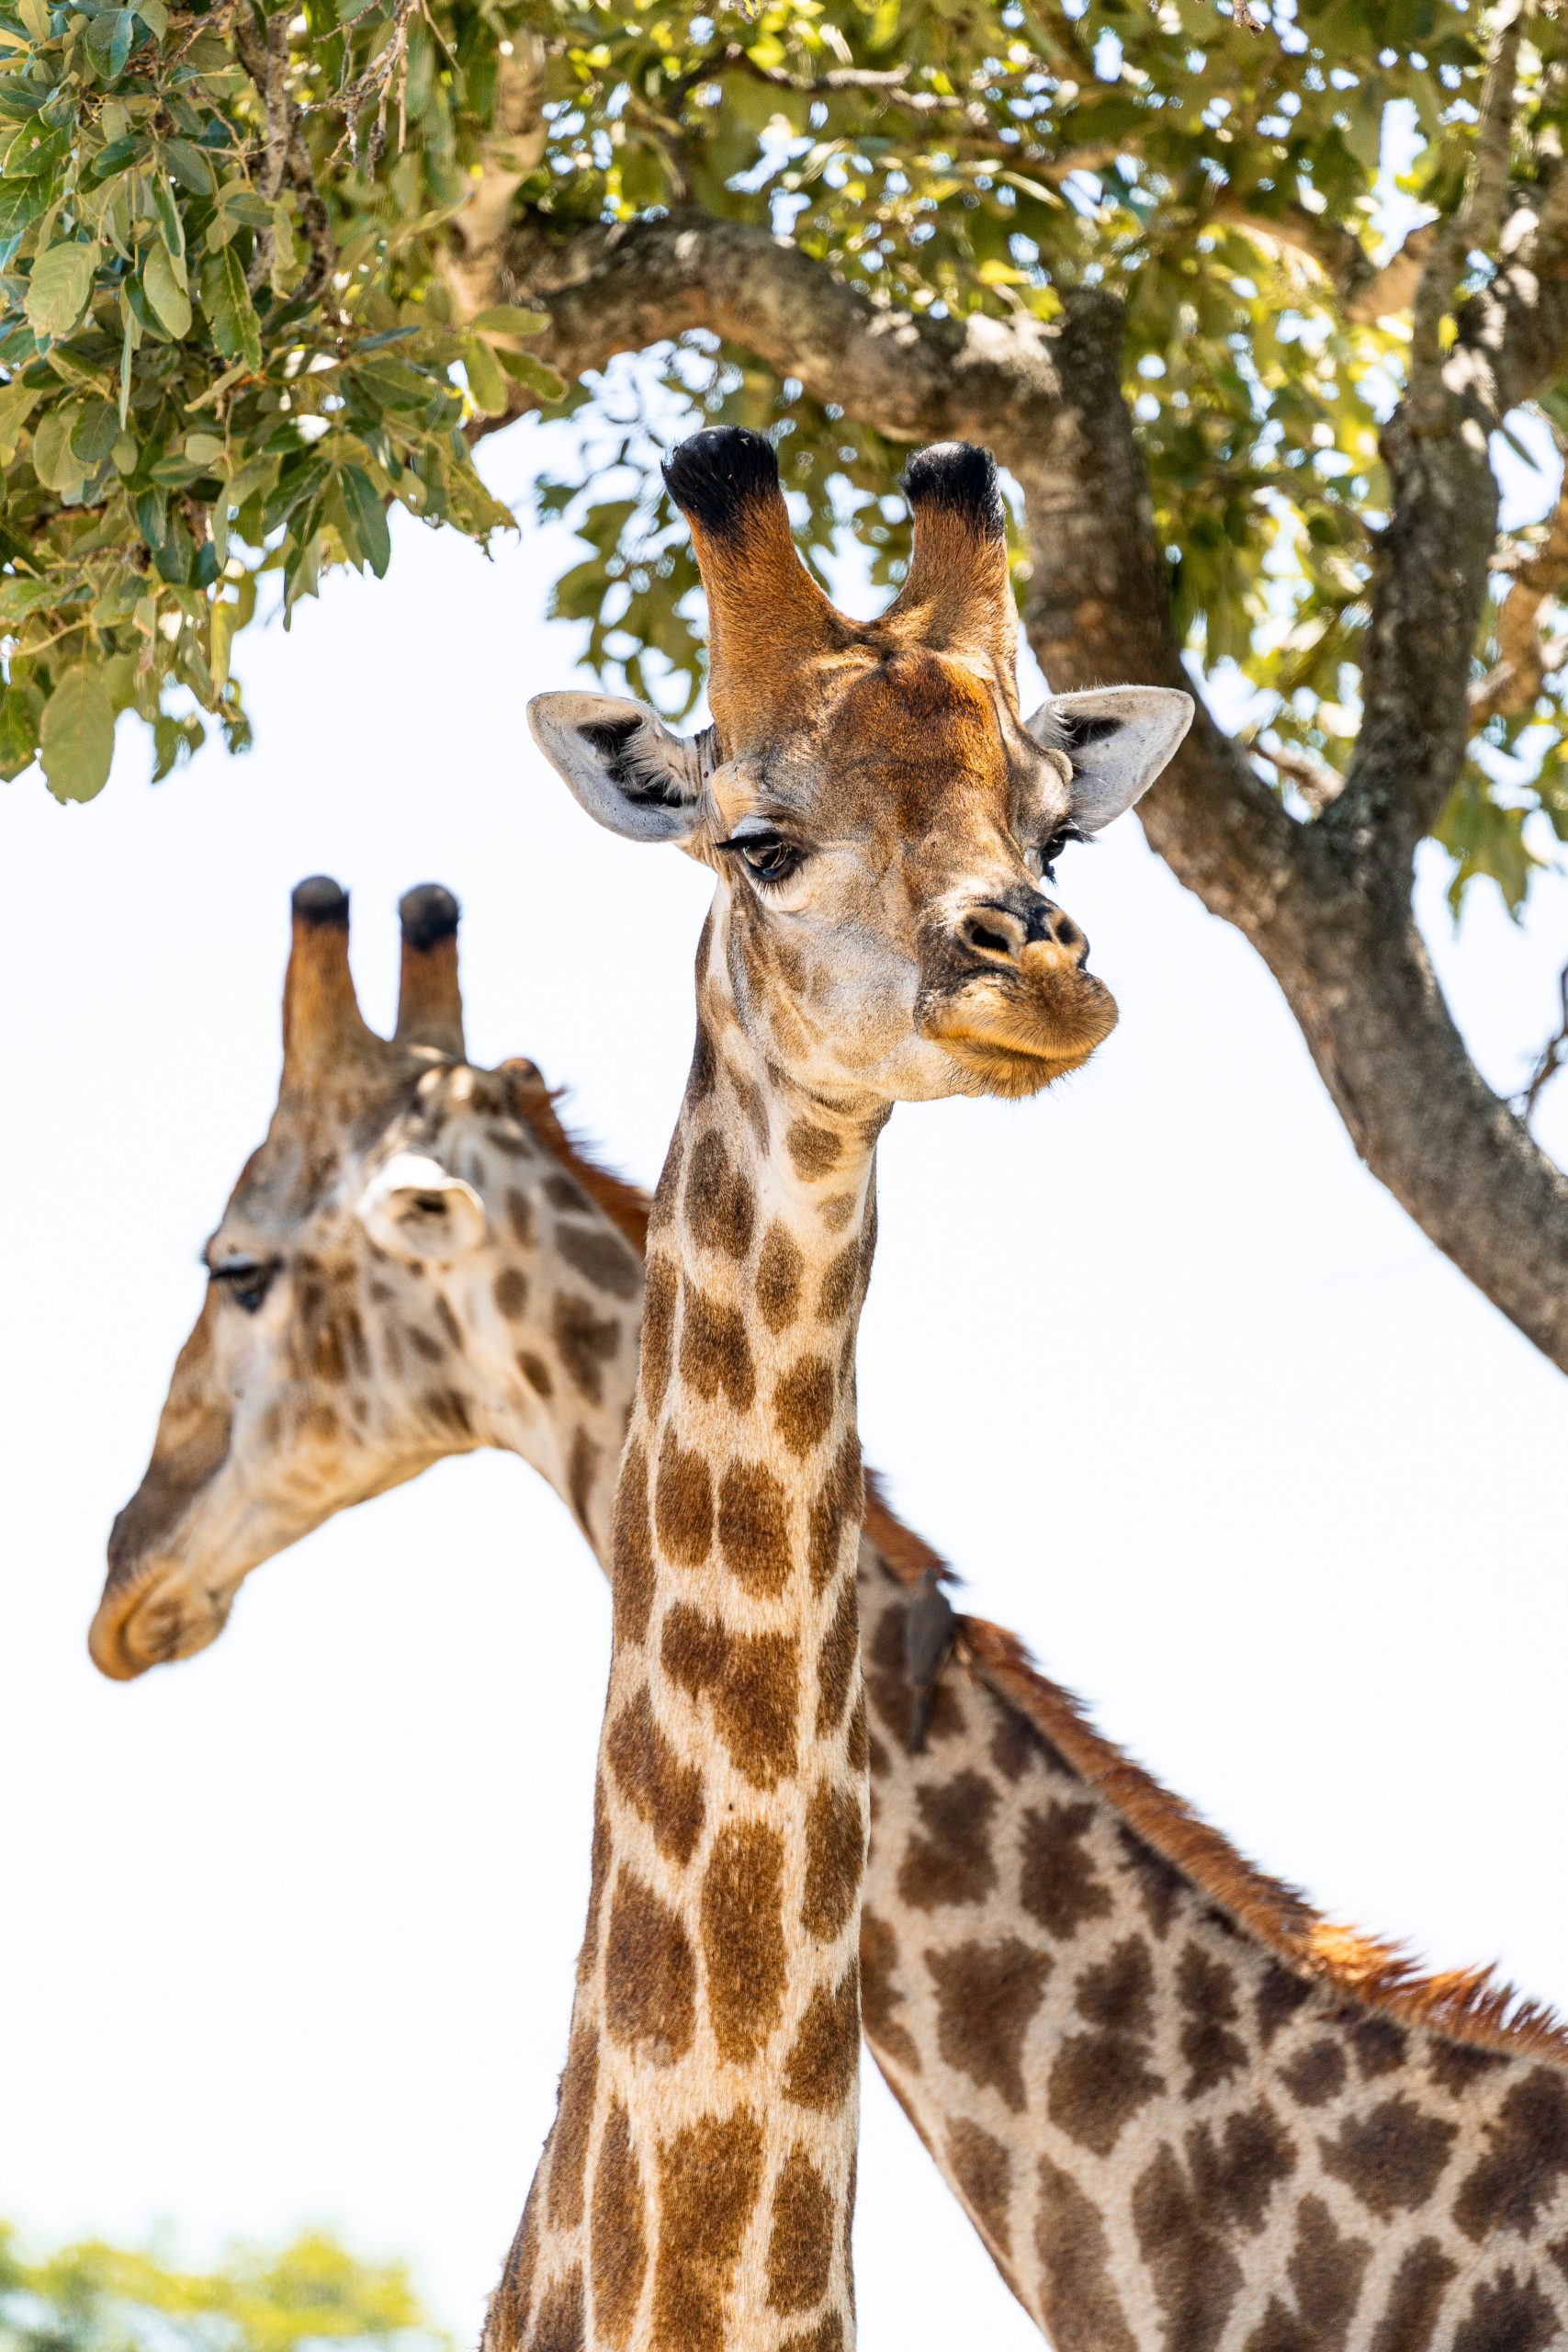 Two giraffes standing under a tree